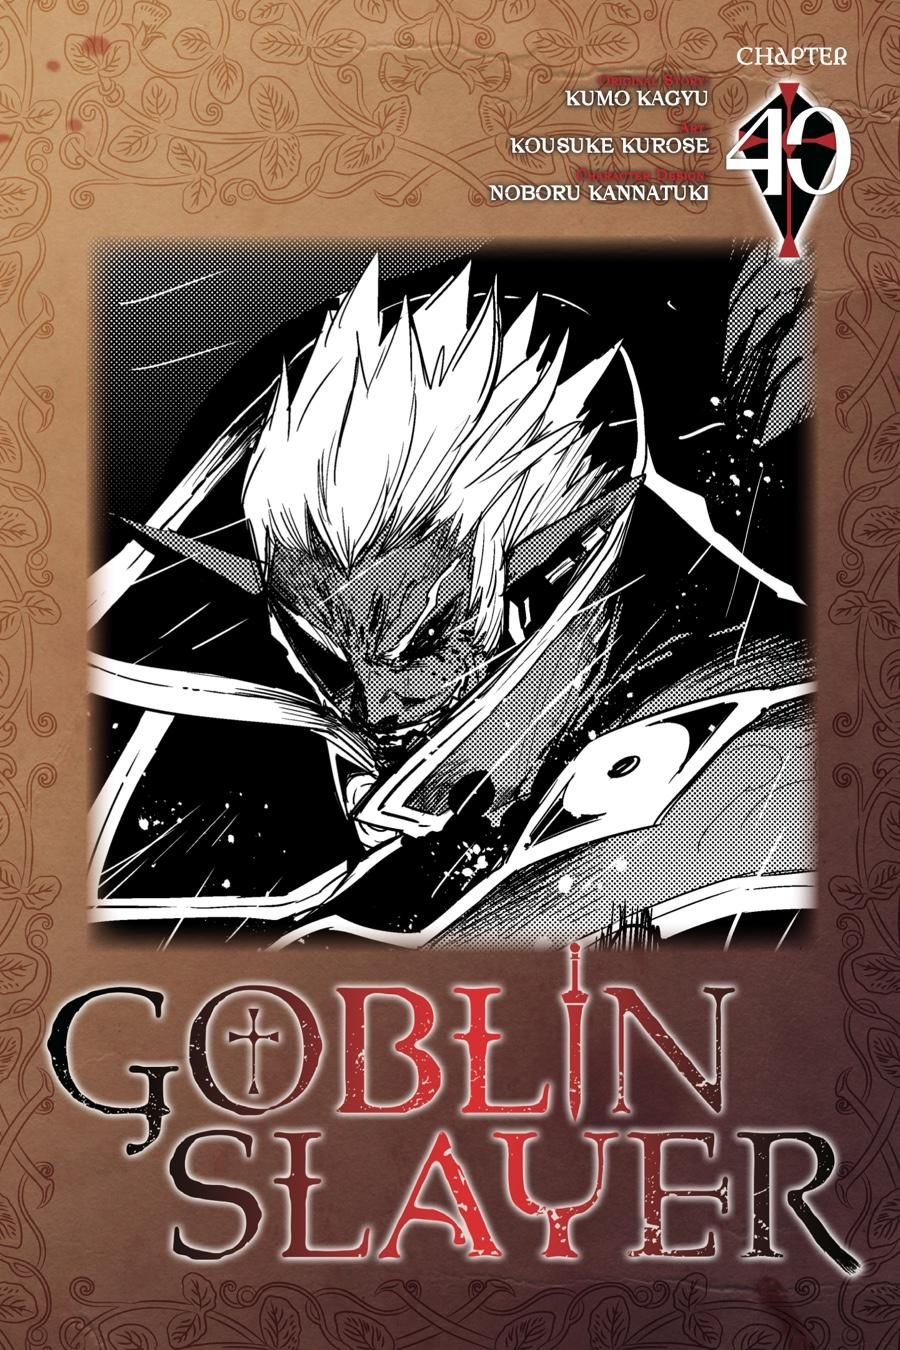 Manga Volume 5, Goblin Slayer Wiki